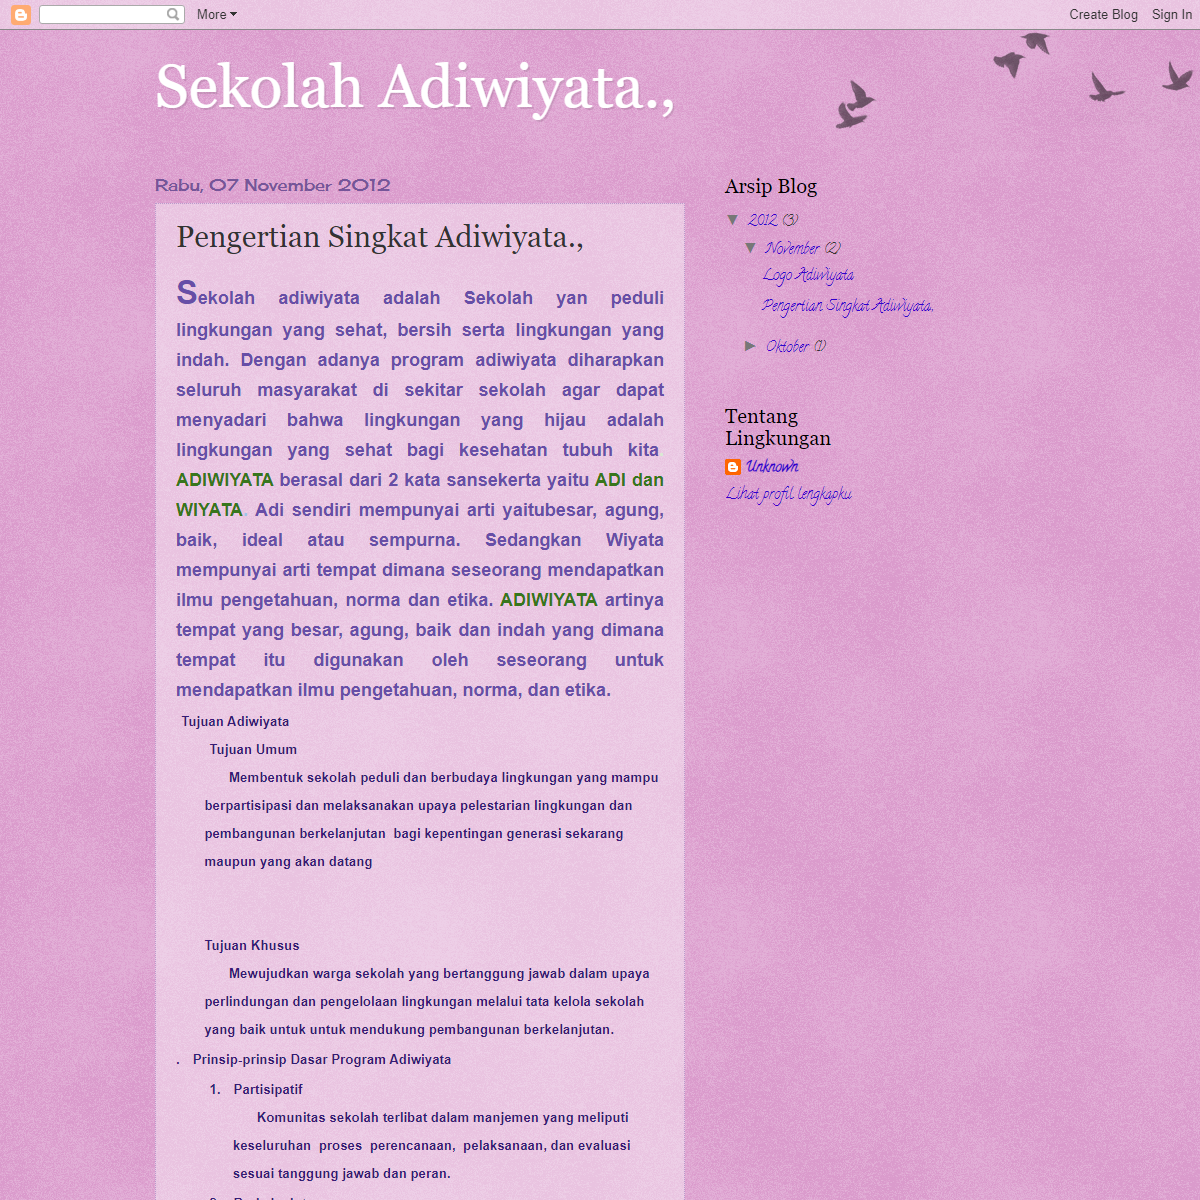 A complete backup of https://albasitharizkadyahsilvian.blogspot.com/2012/11/pengertian-singkat-adiwiyata.html